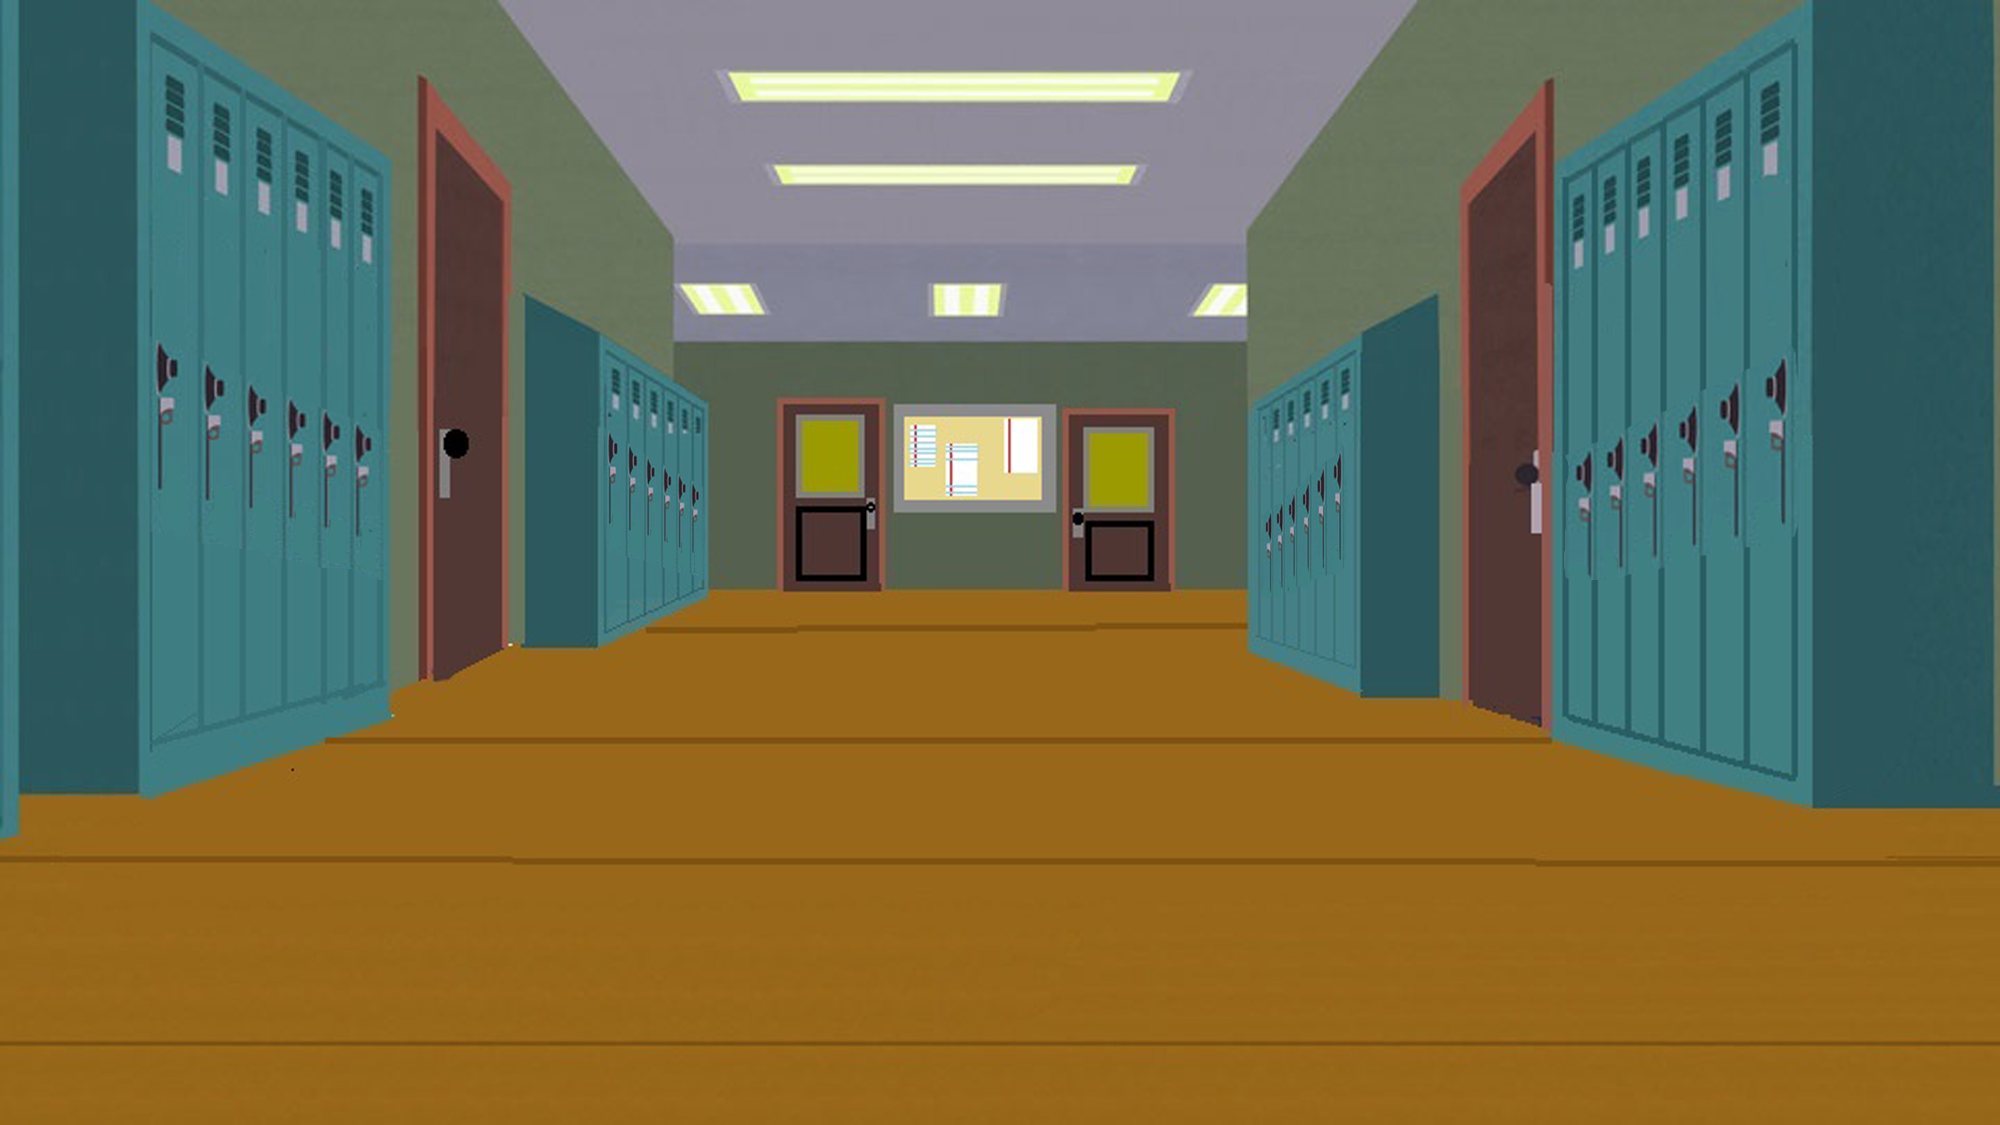 Free Classroom Hallway Cliparts, Download Free Clip Art.